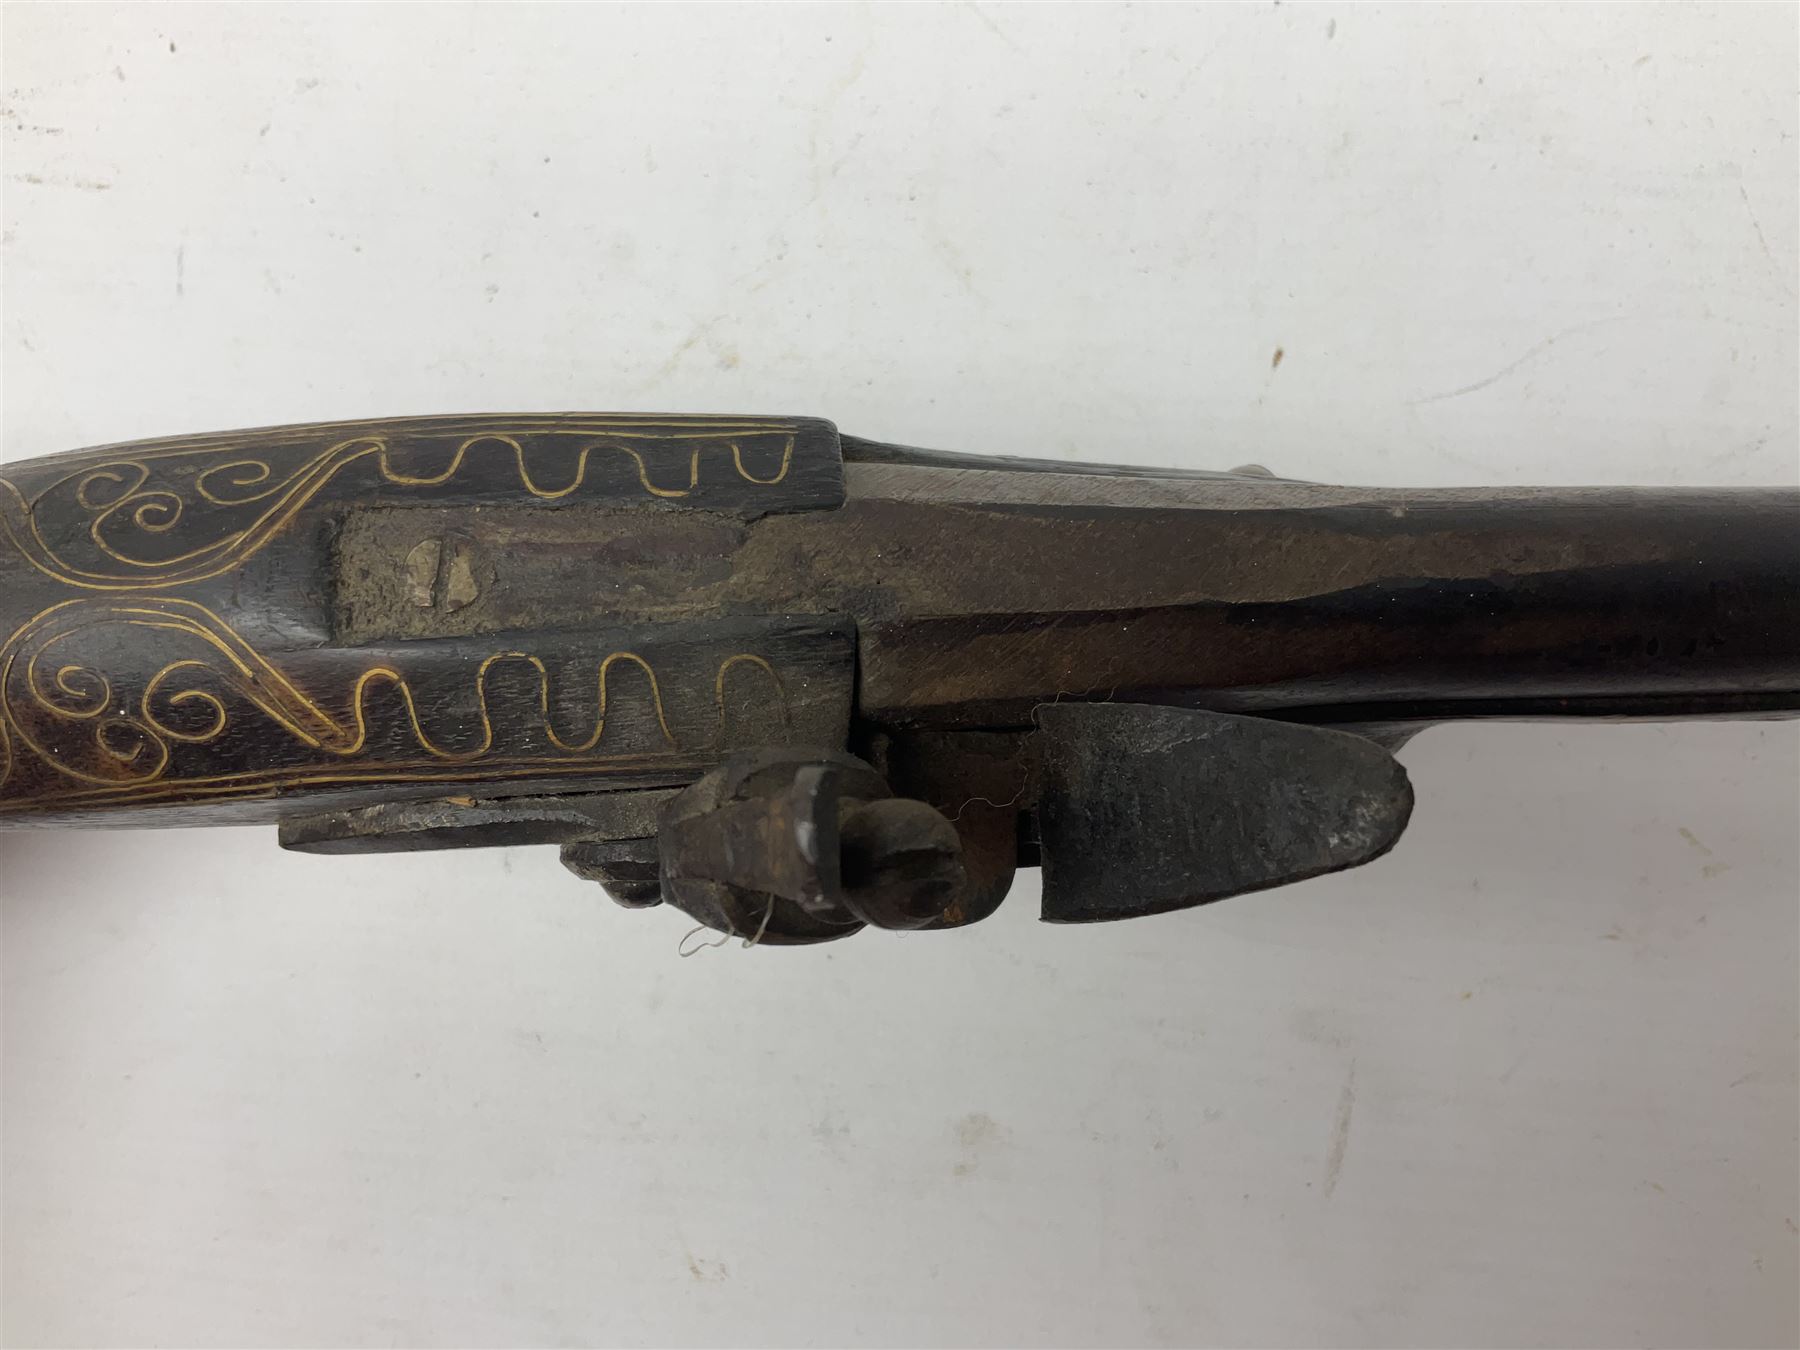 Reproduction flintlock pistol - Image 15 of 15